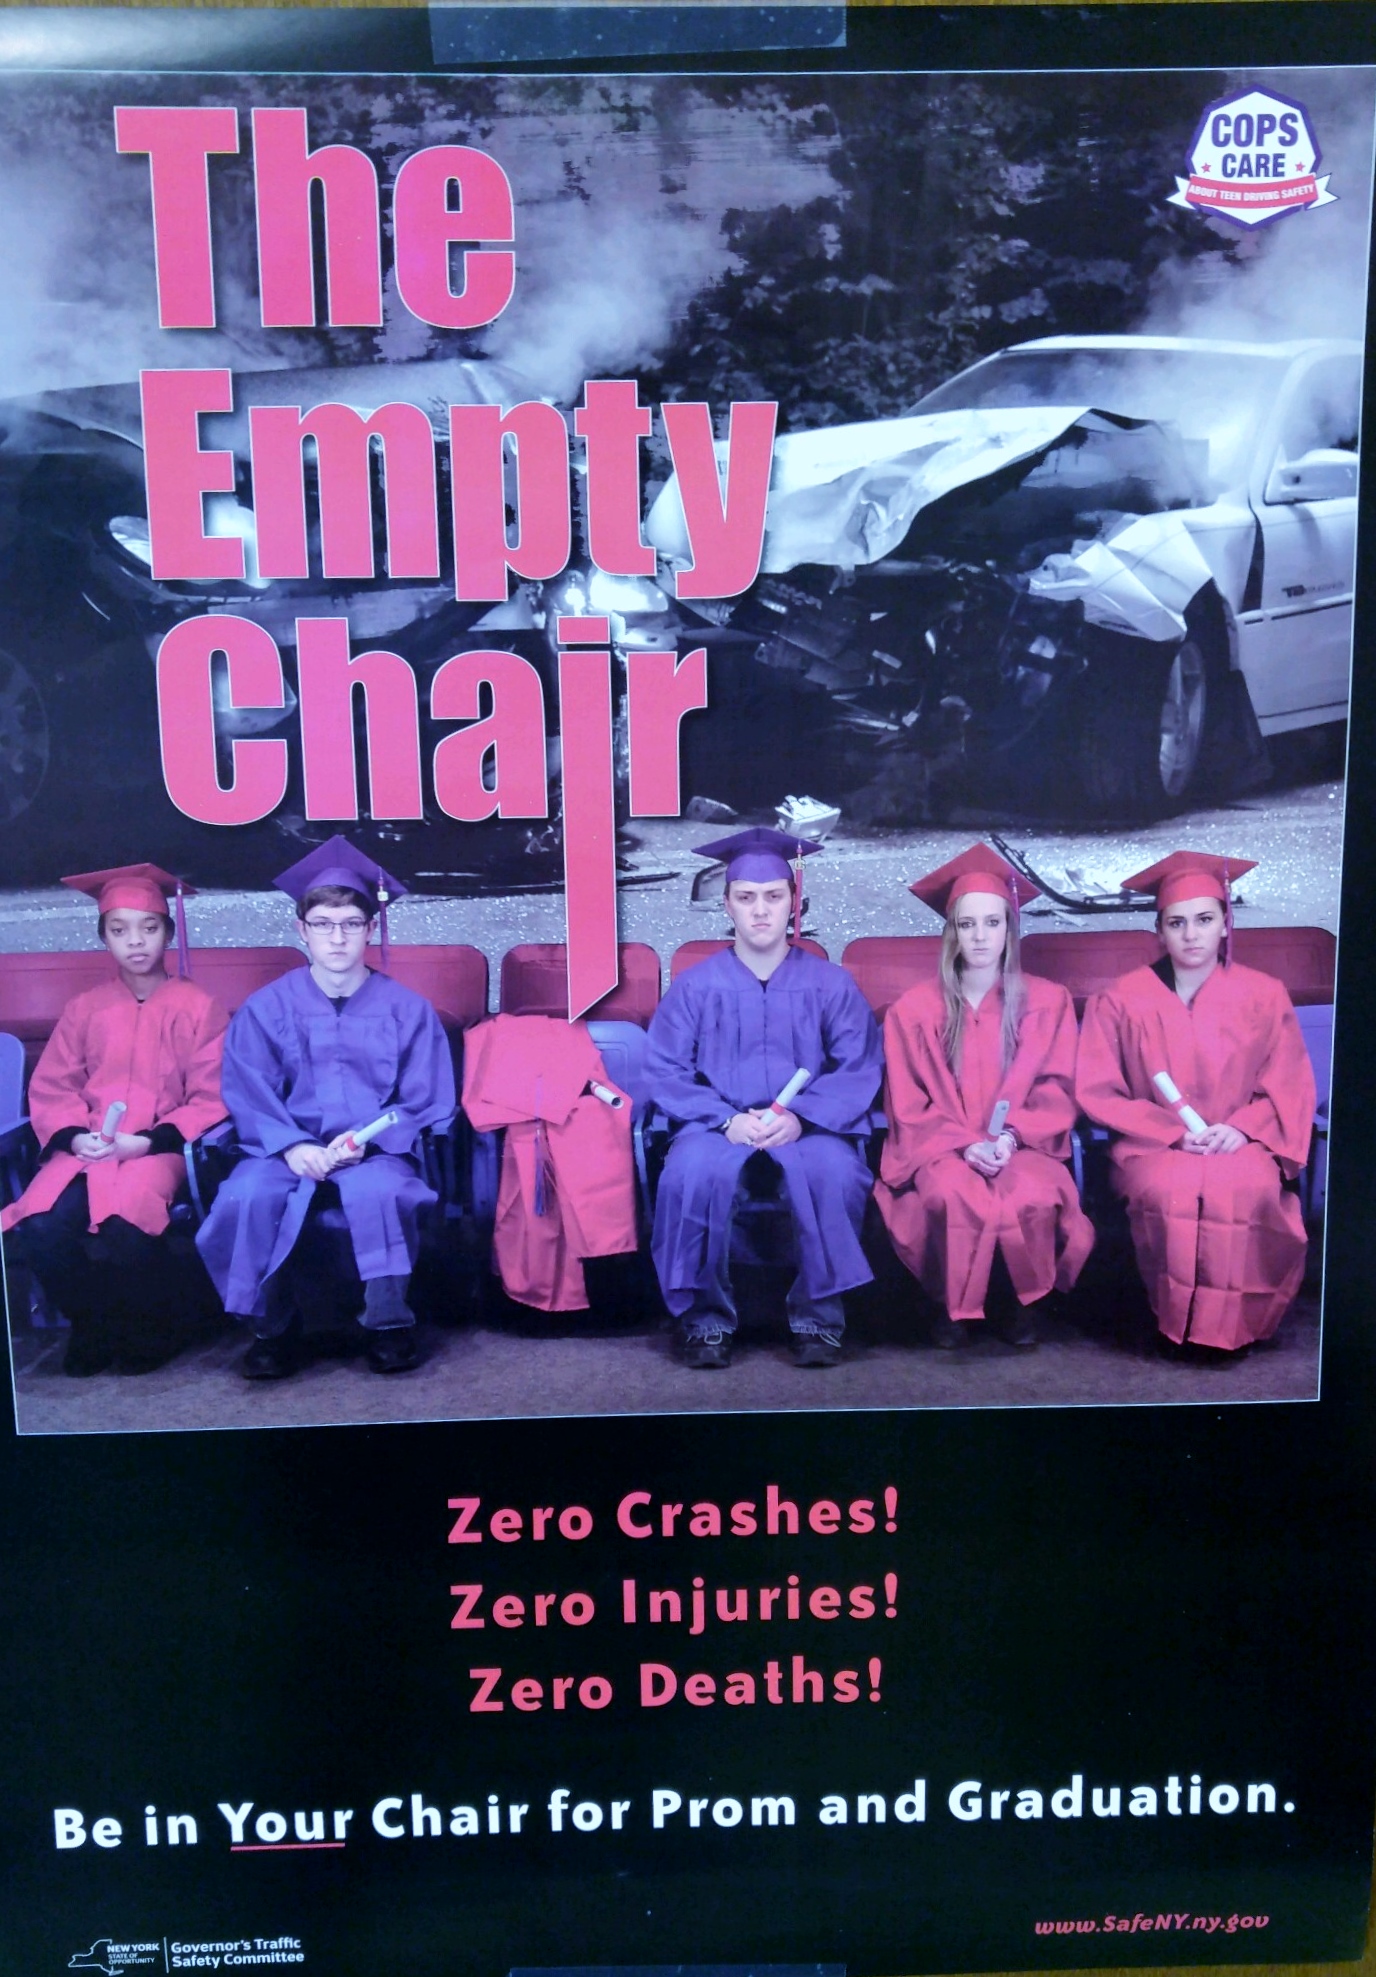 ‘No Empty Chair’ campaign enforced in West Seneca